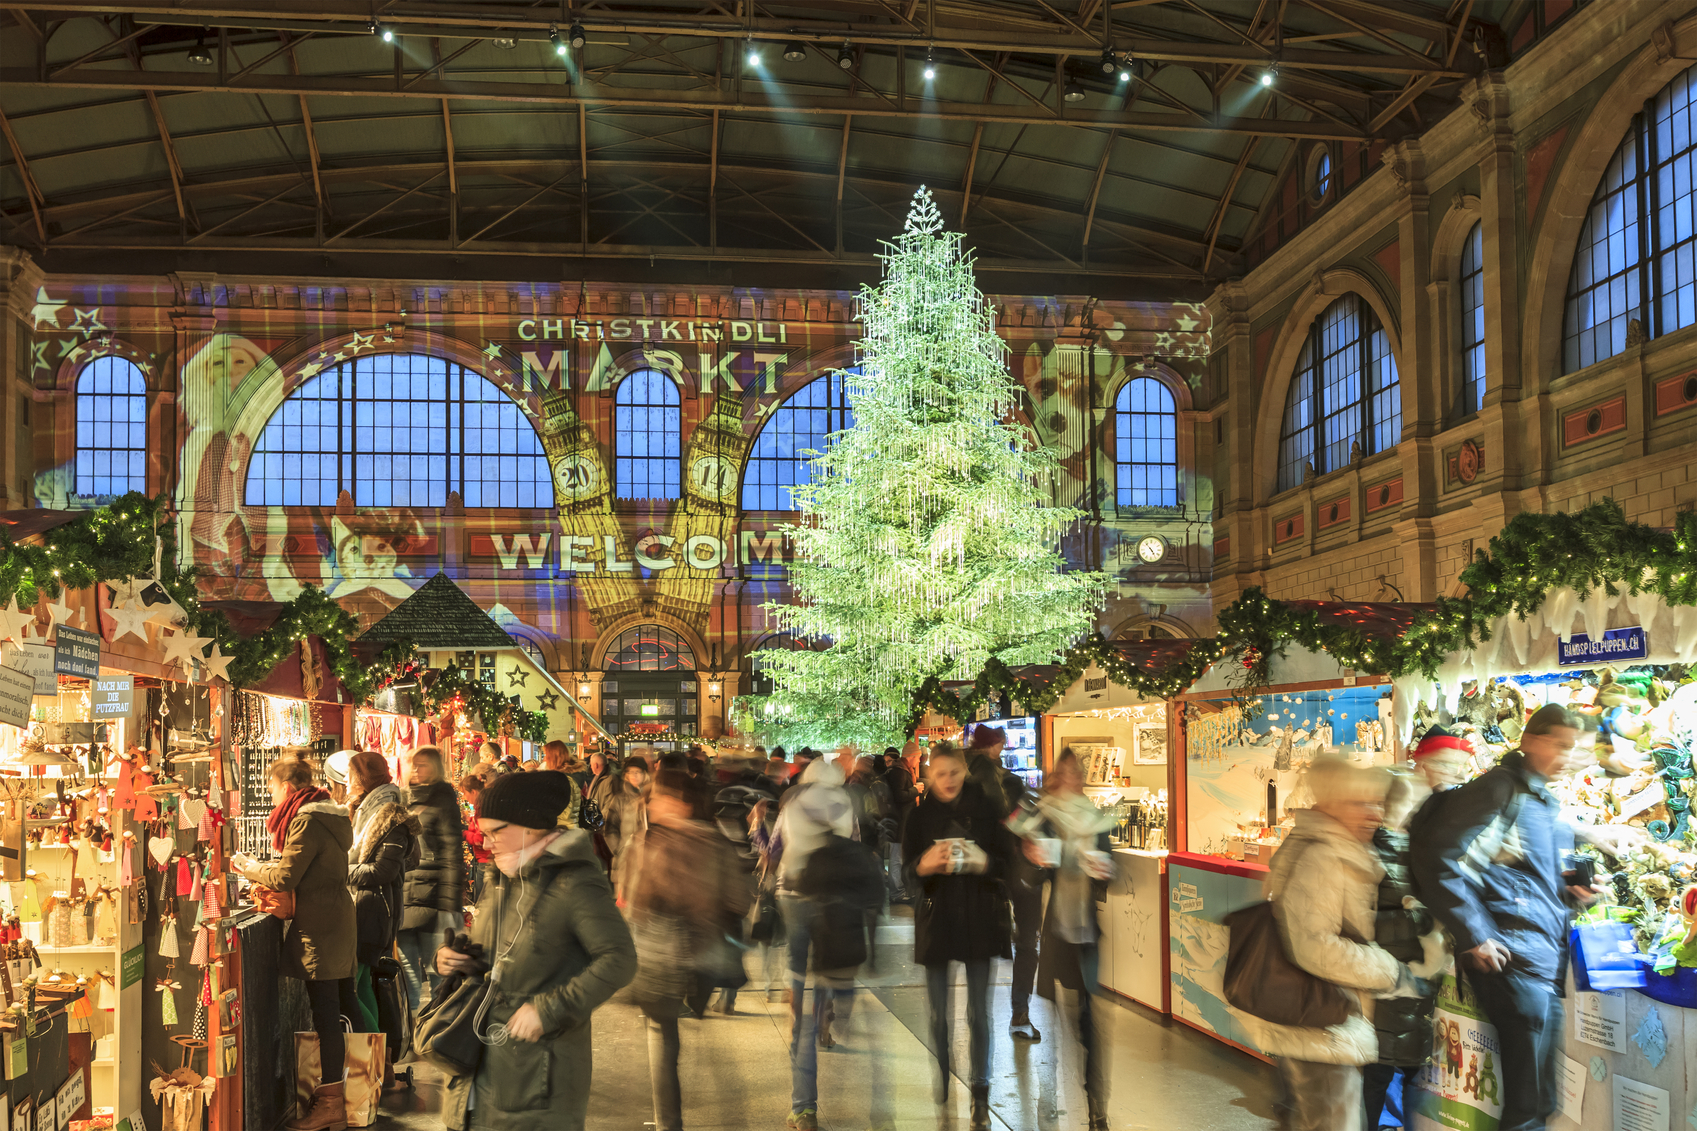 Europe's best Christmas markets - ebookers Blog - Travel Photos, Travel